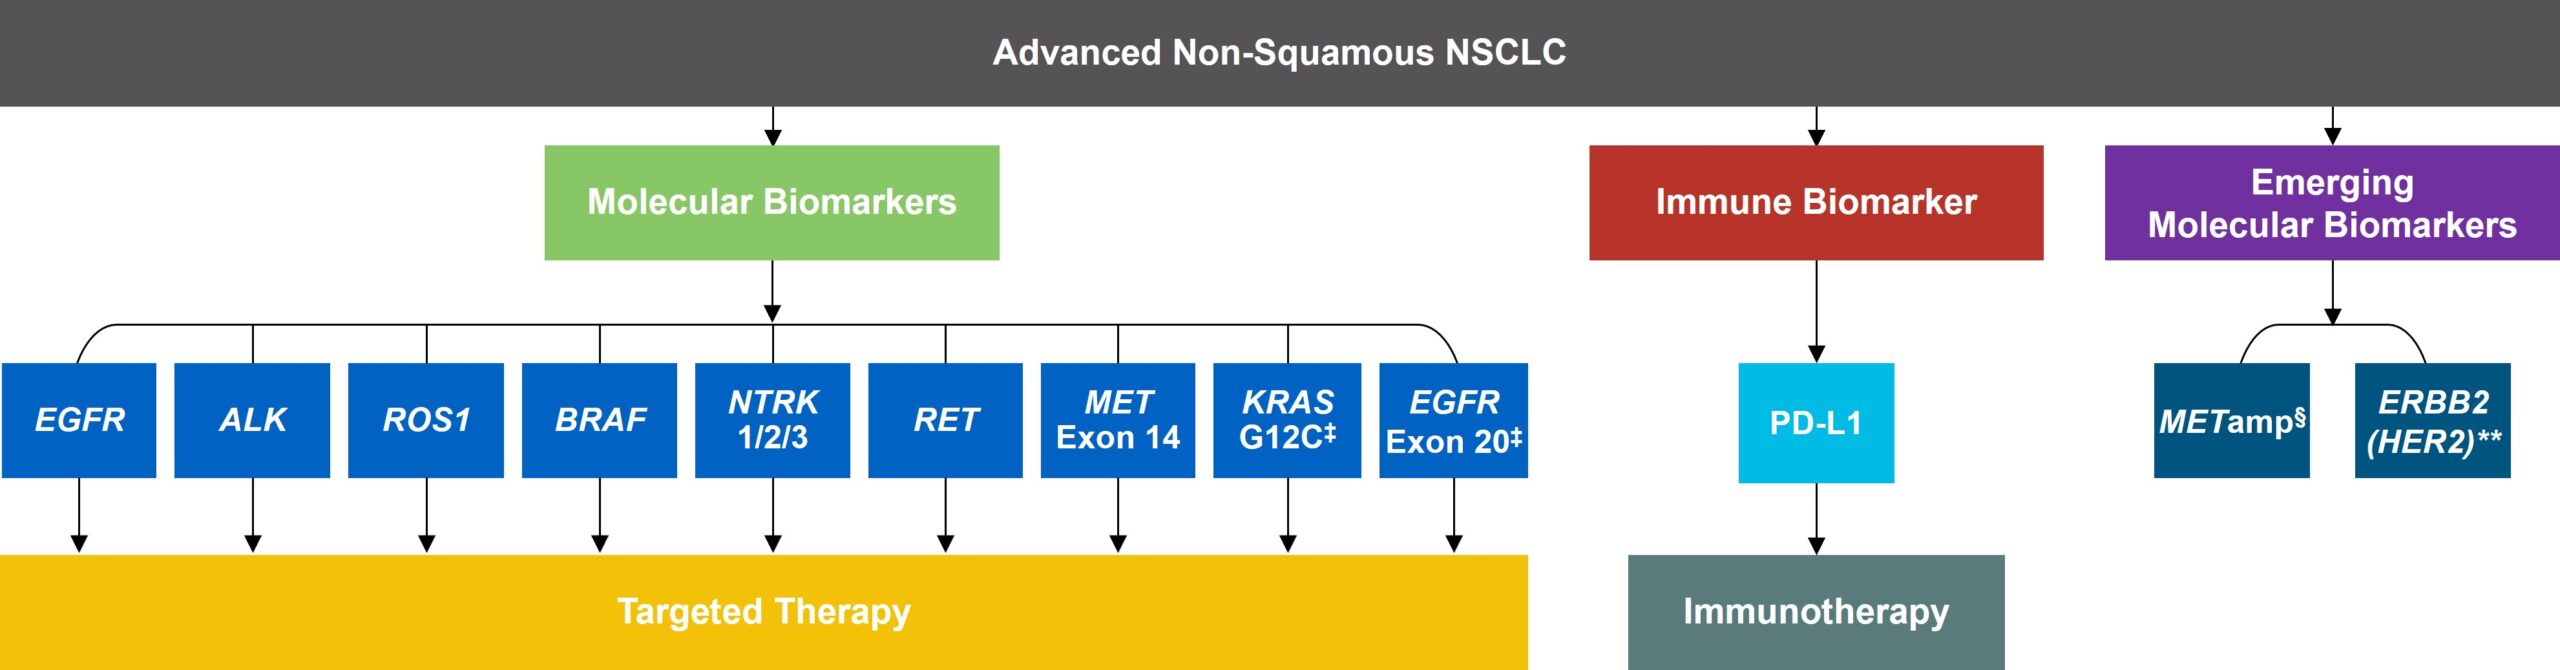 Advanced-Non-Squamous-NSCLC